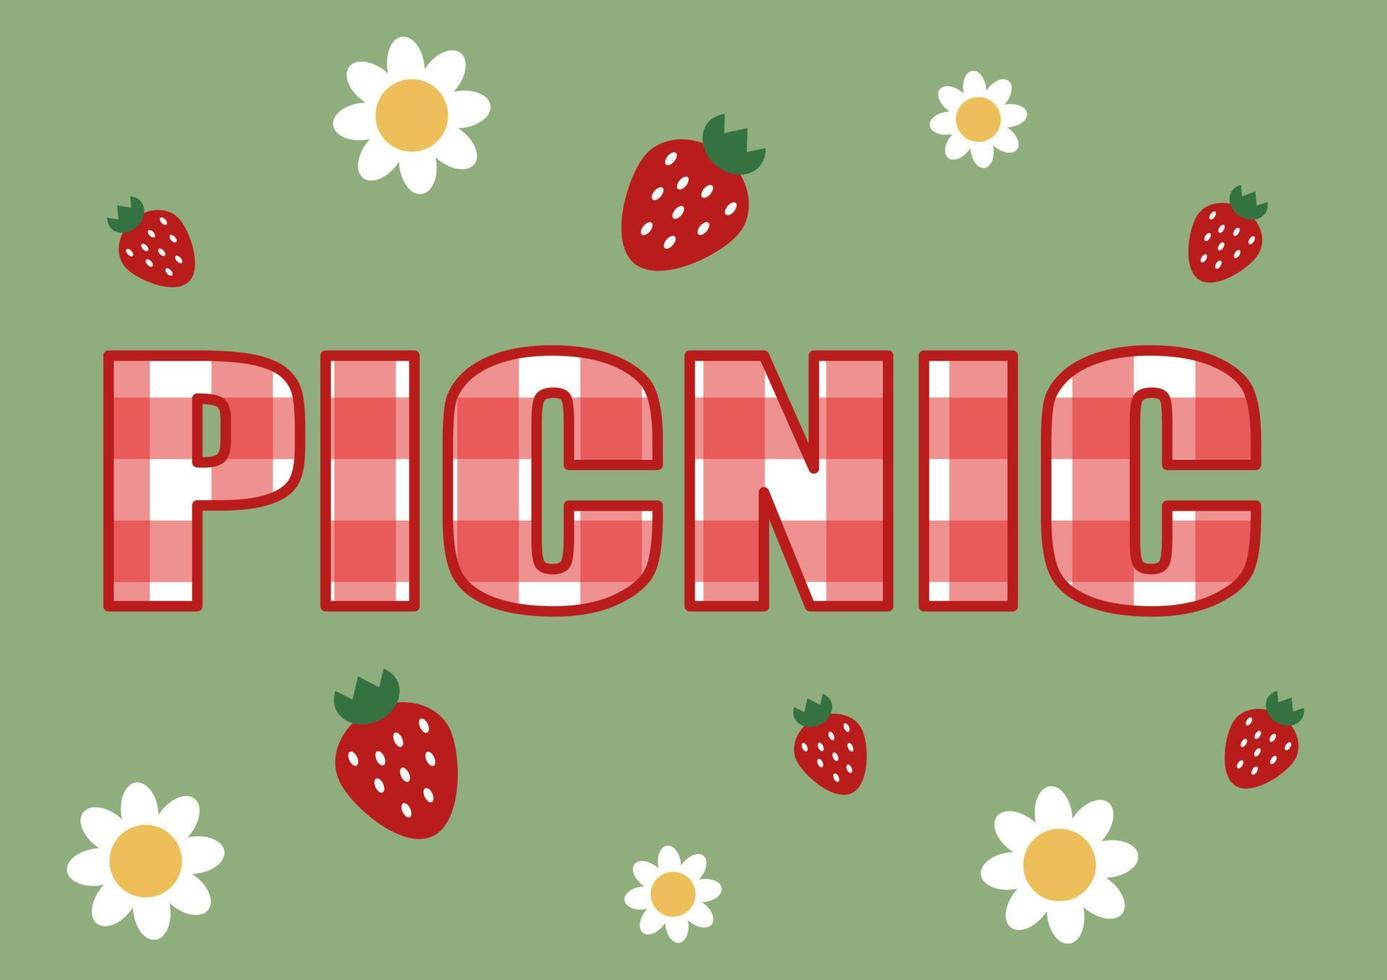 picknick poster, vector. vector